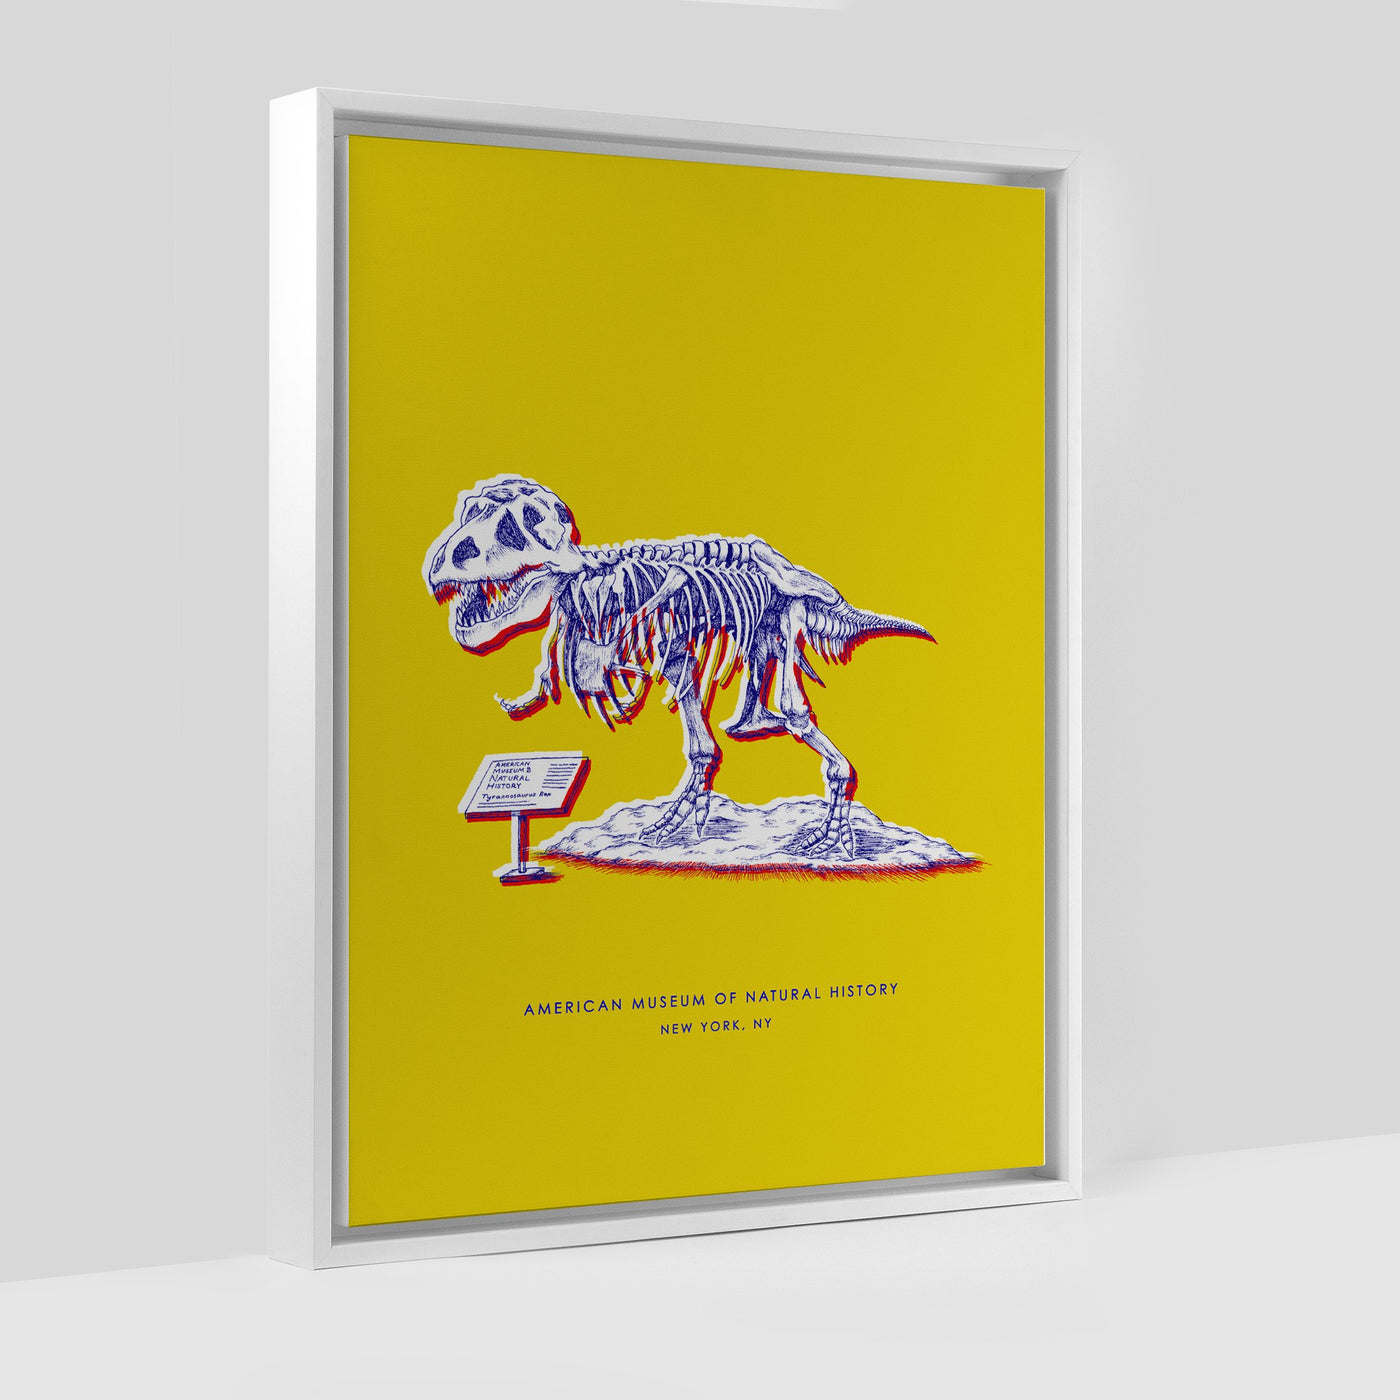 Gallery Prints Yellow Canvas / 8x10 / White Frame New York Dinosaur Print dombezalergii